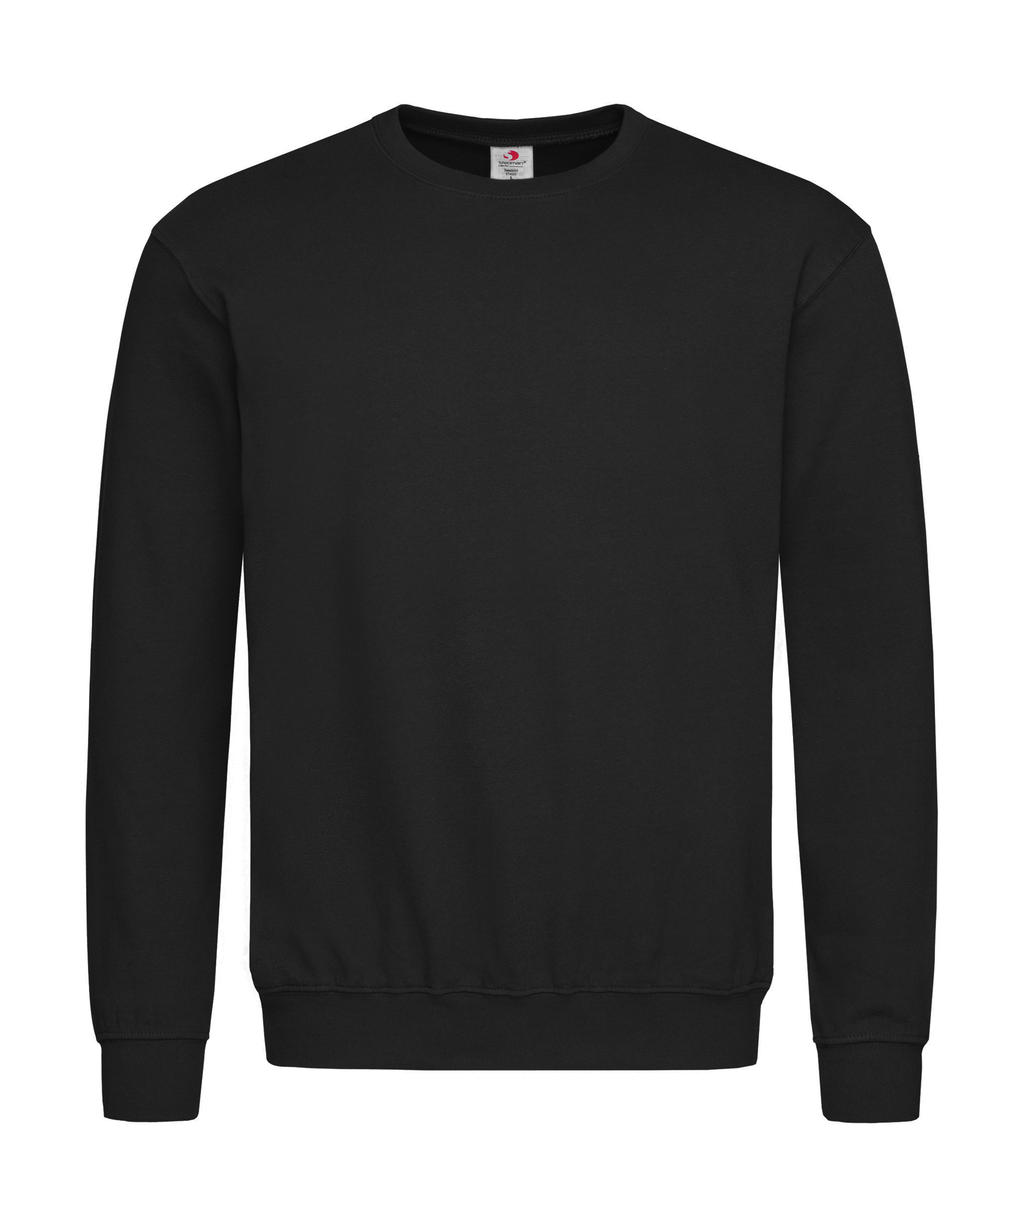  Unisex Sweatshirt Classic in Farbe Black Opal